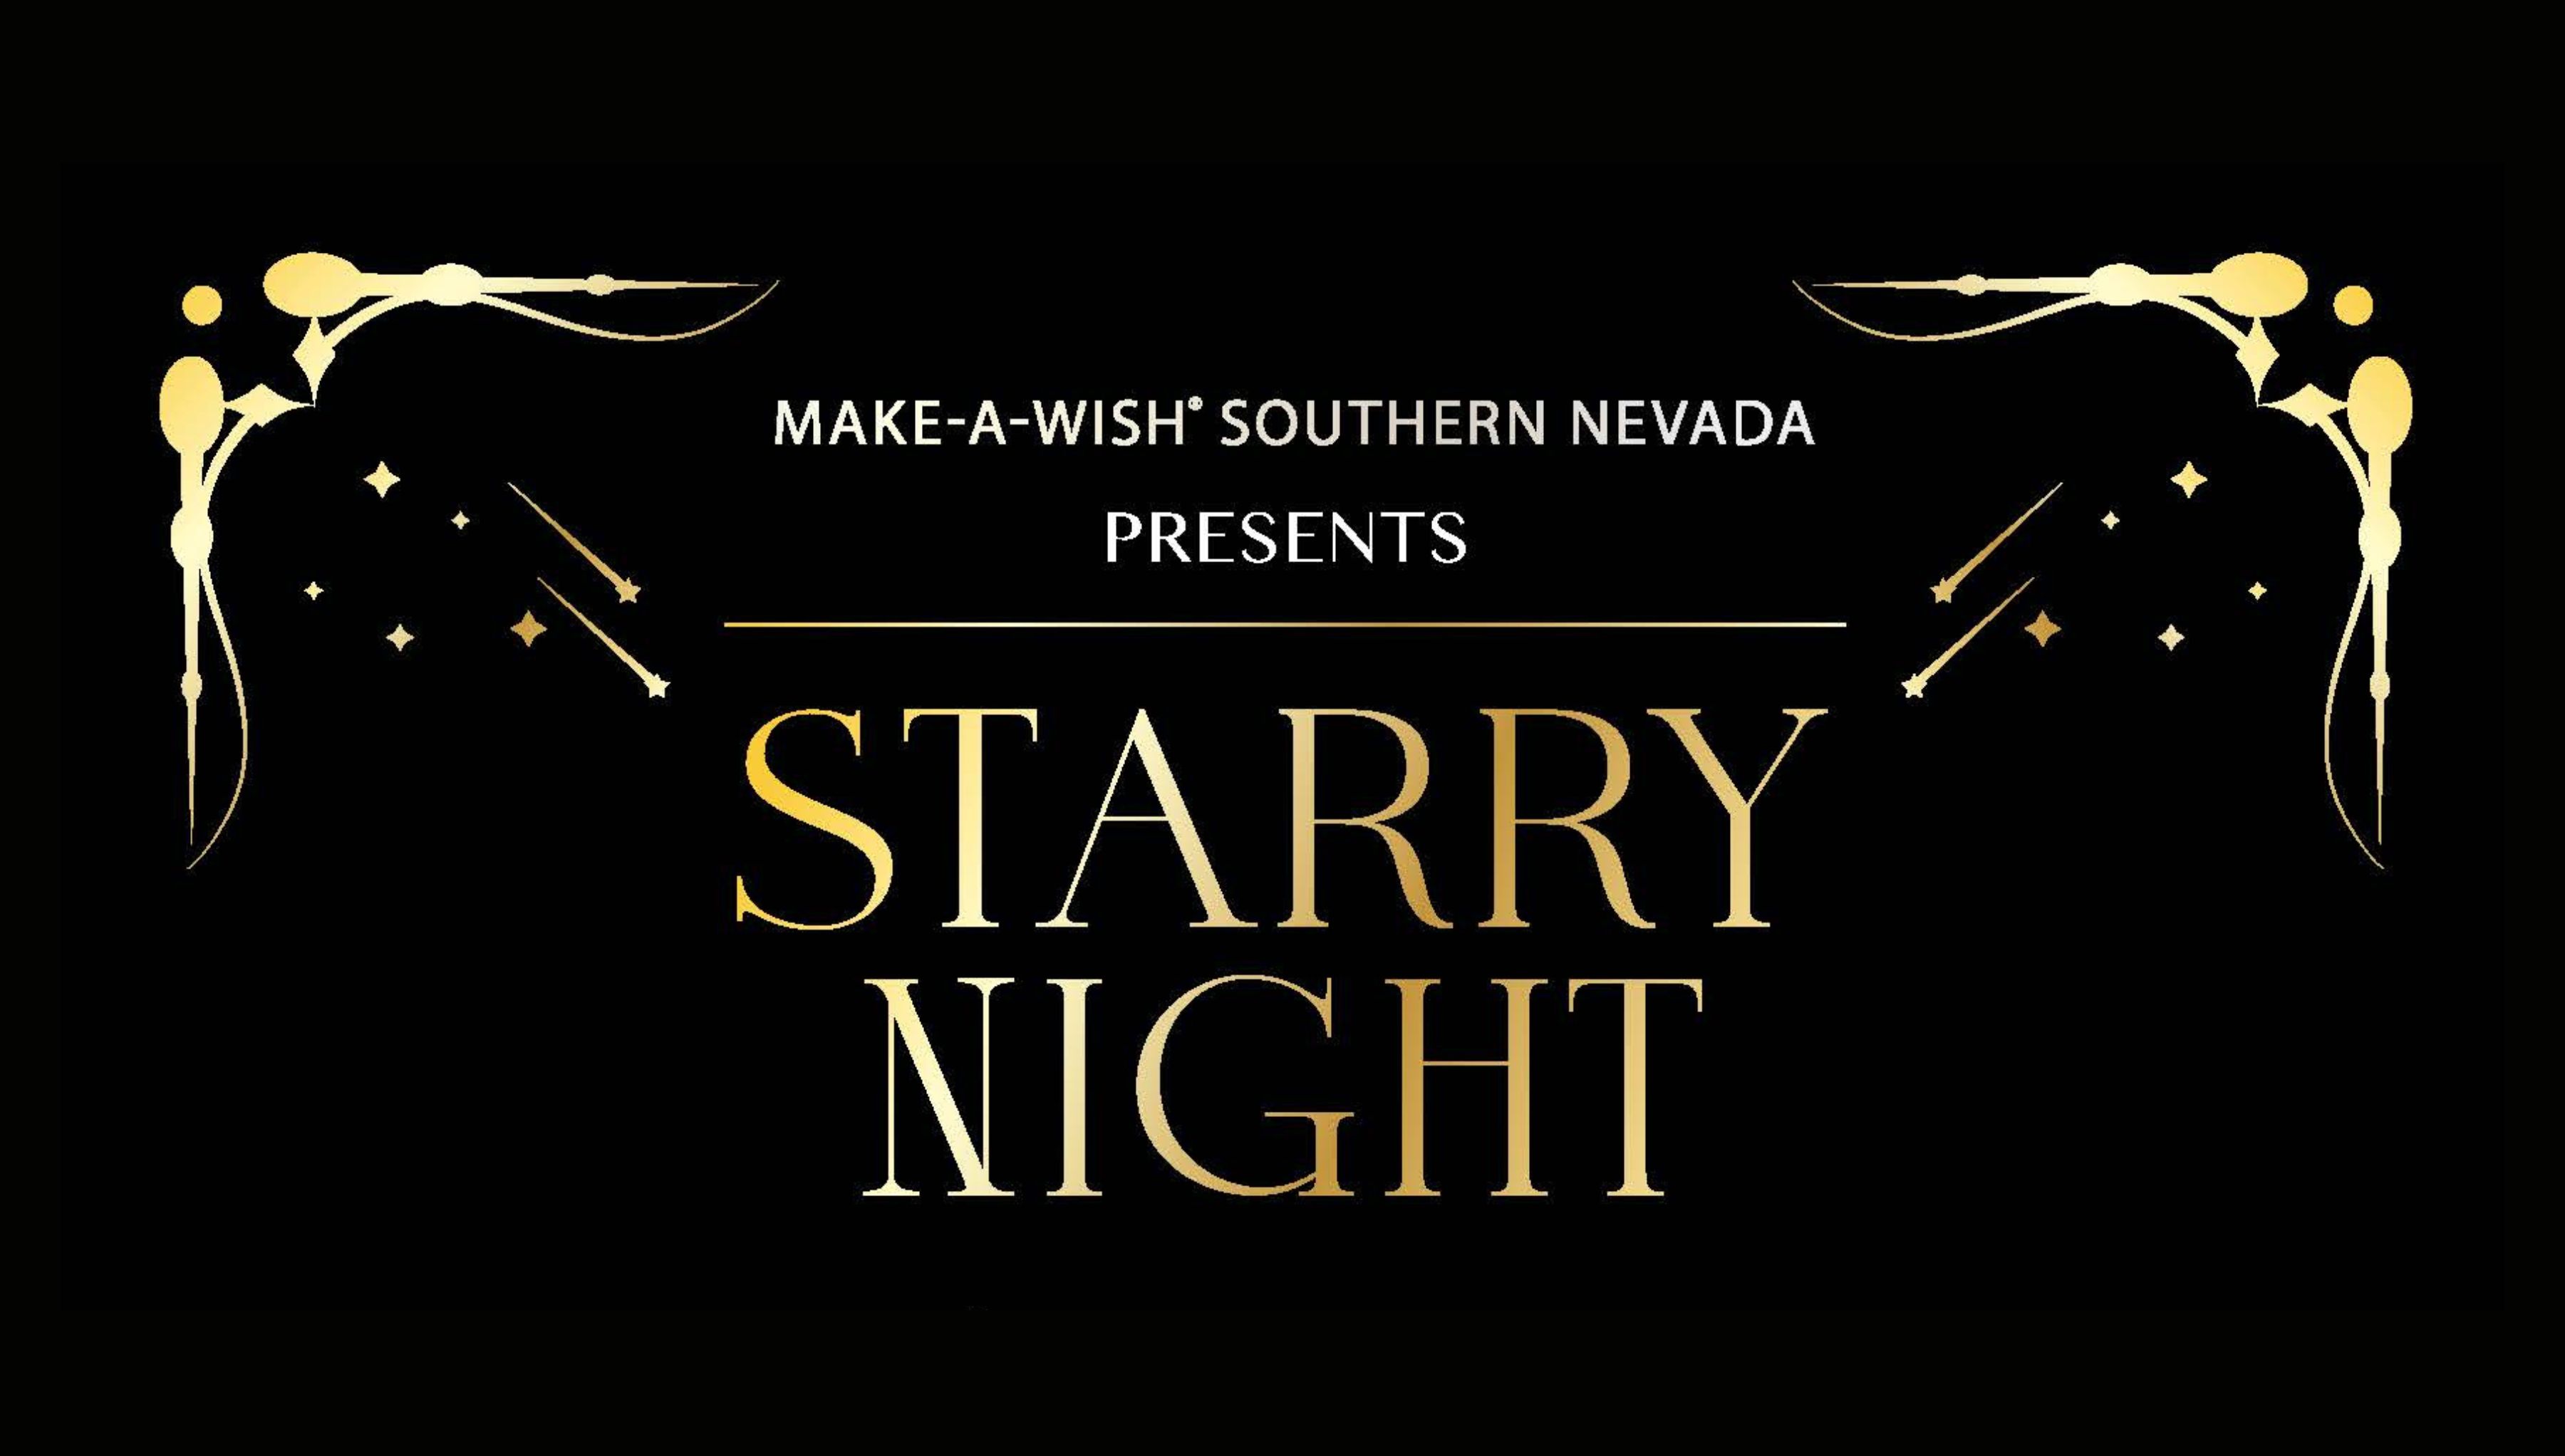 Starry Night - Make-A-Wish® Southern Nevada